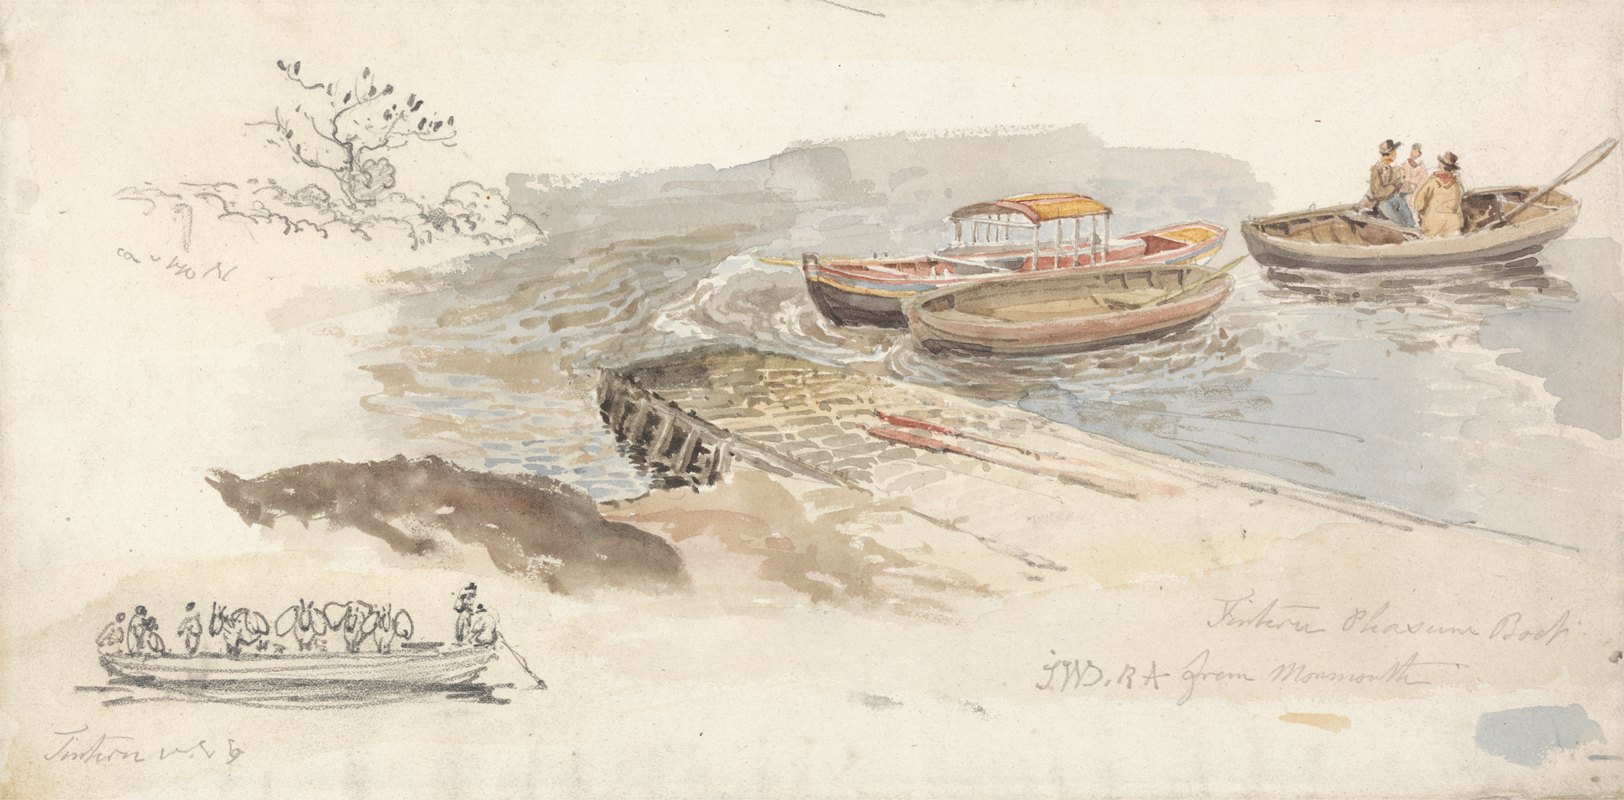 码头上有一艘带顶篷的船和两艘划艇插图左图为丁顿家畜渡船的铅笔研究`A Canopied Boat and Two Rowing Boats at a Jetty; Inset Left, a Pencil Study of the Tintern Livestock Ferry~boat by James Ward